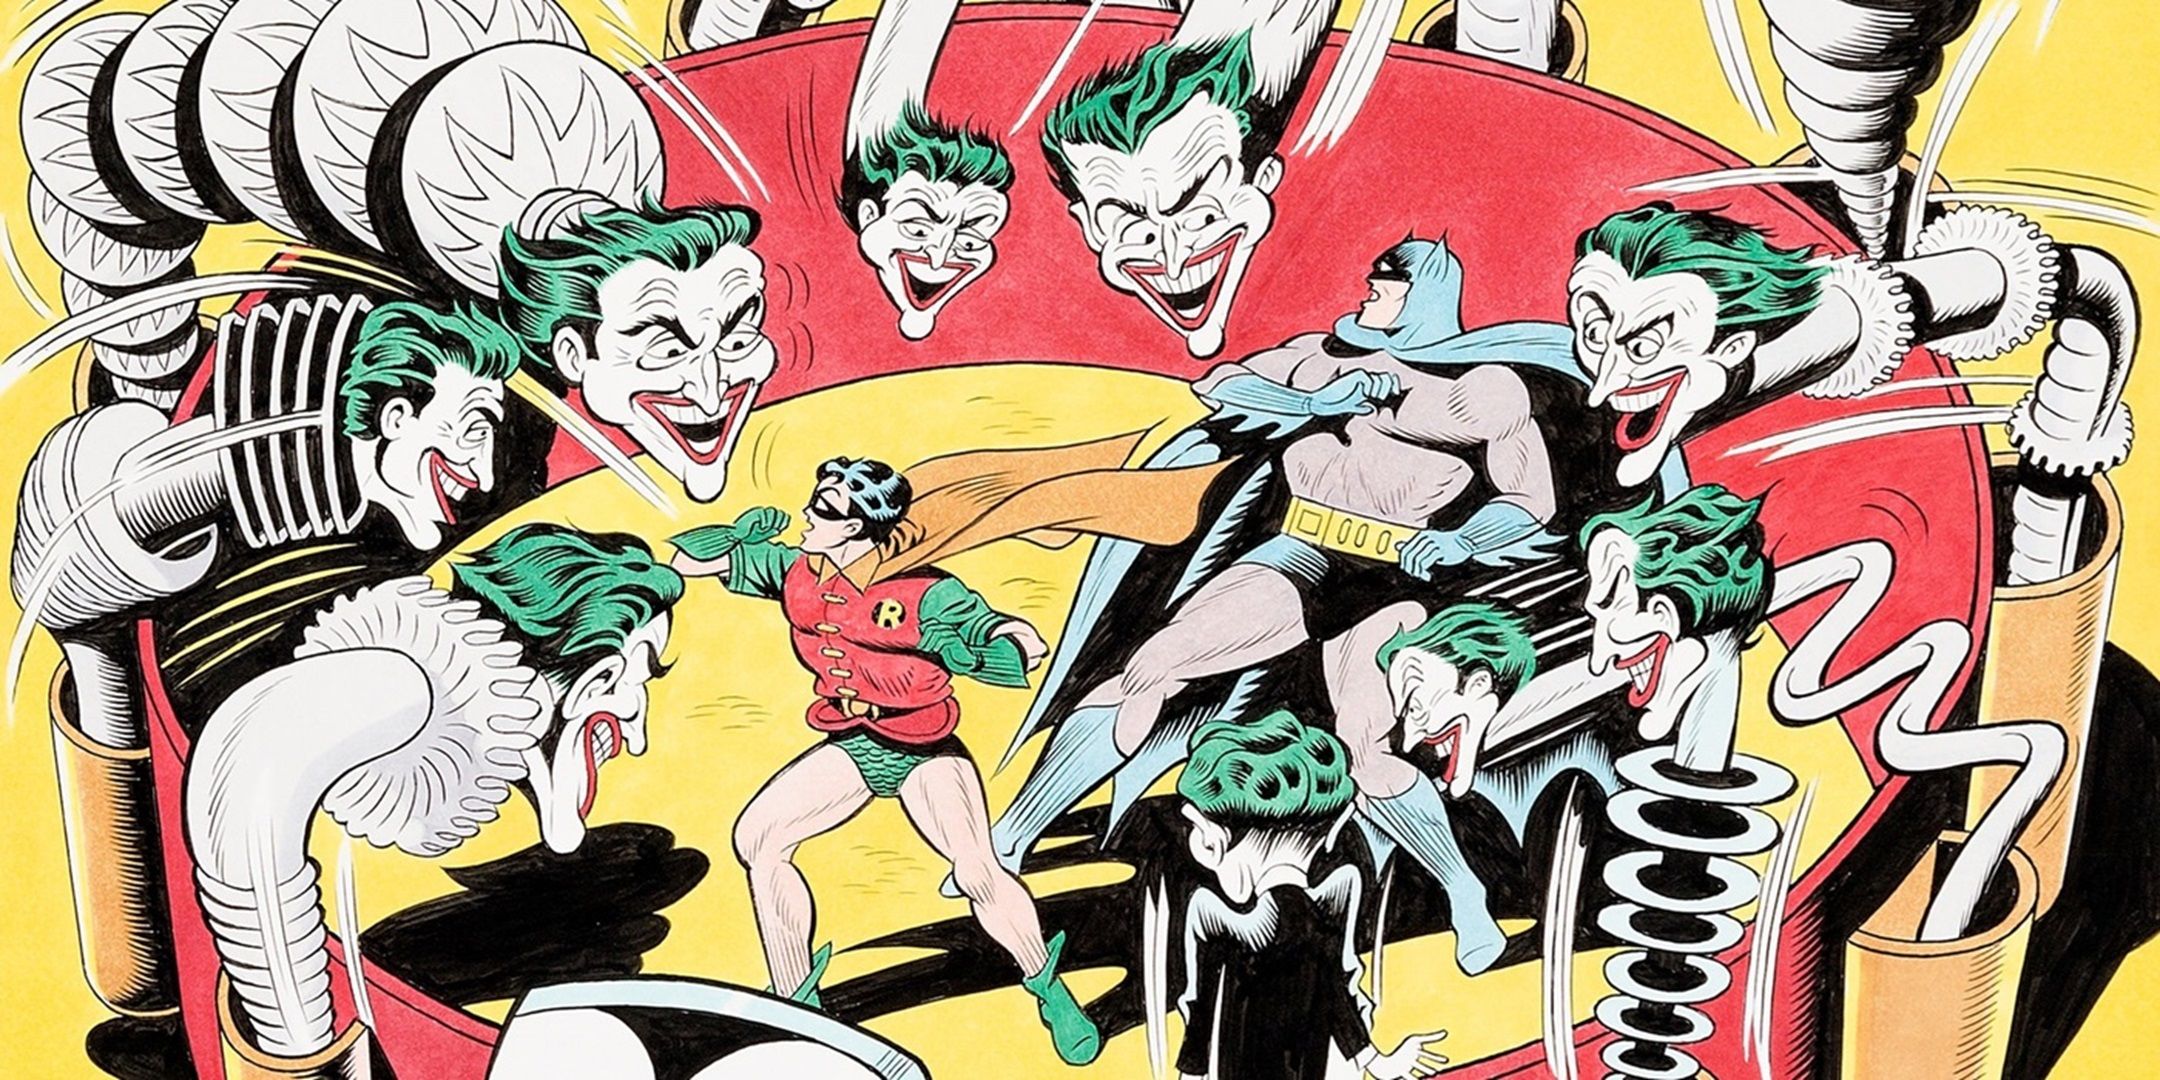 The Joker's utility belt attacks Batman and RObin